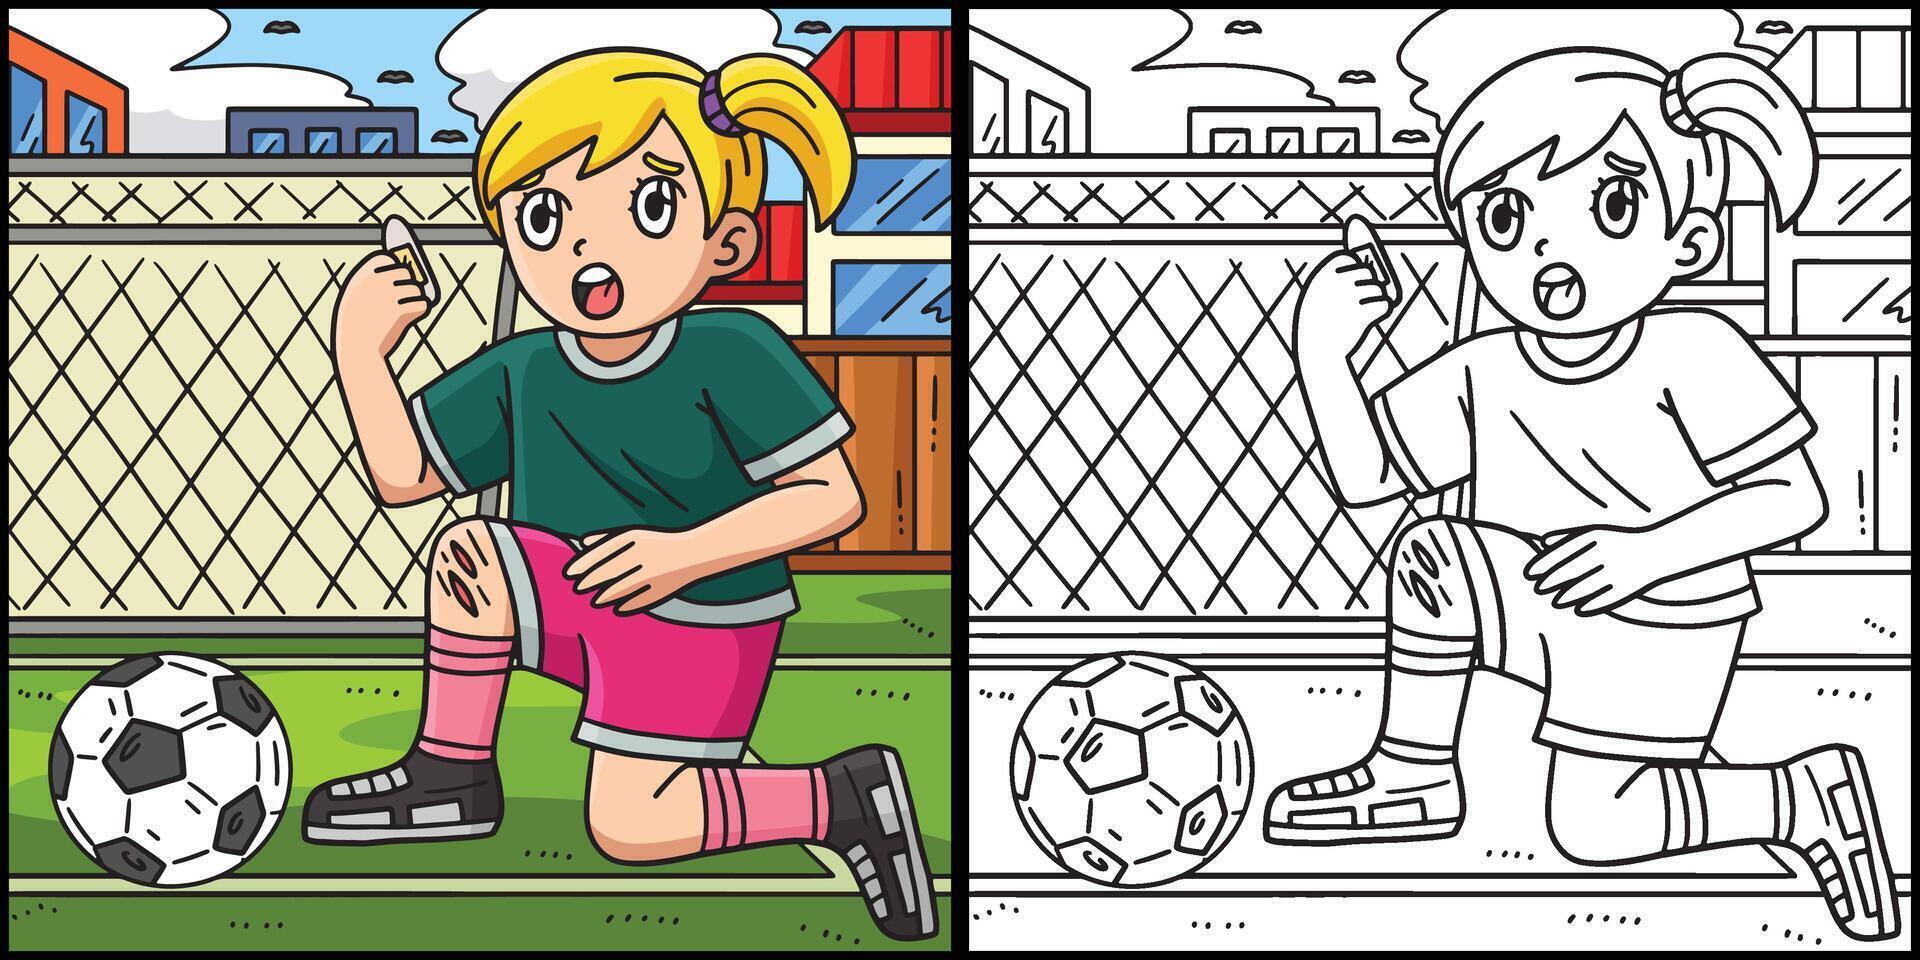 meisje met voetbal bal gewond knie illustratie vector